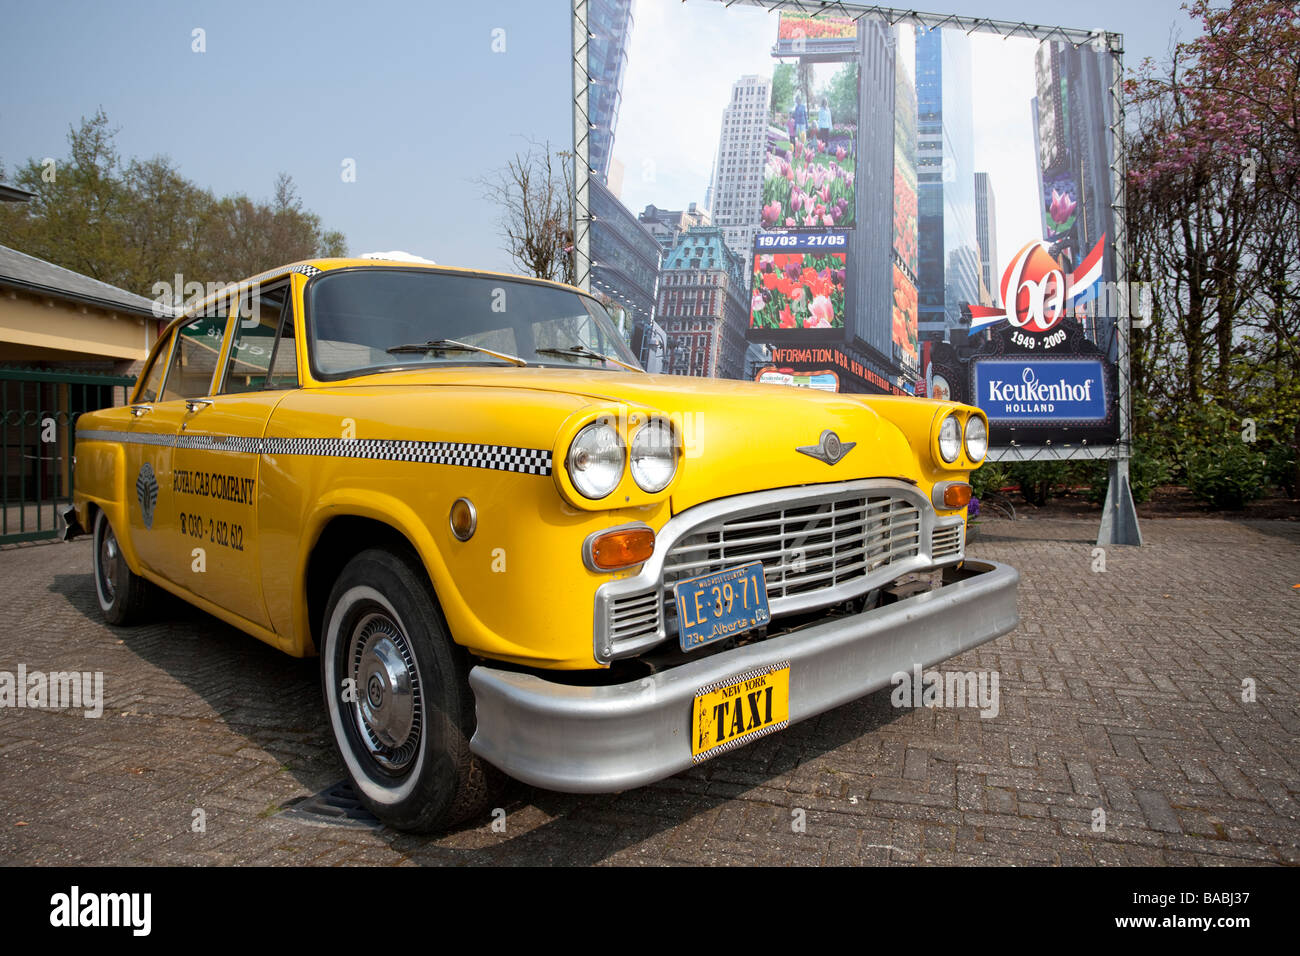 Yellow taxi cab on display. Stock Photo